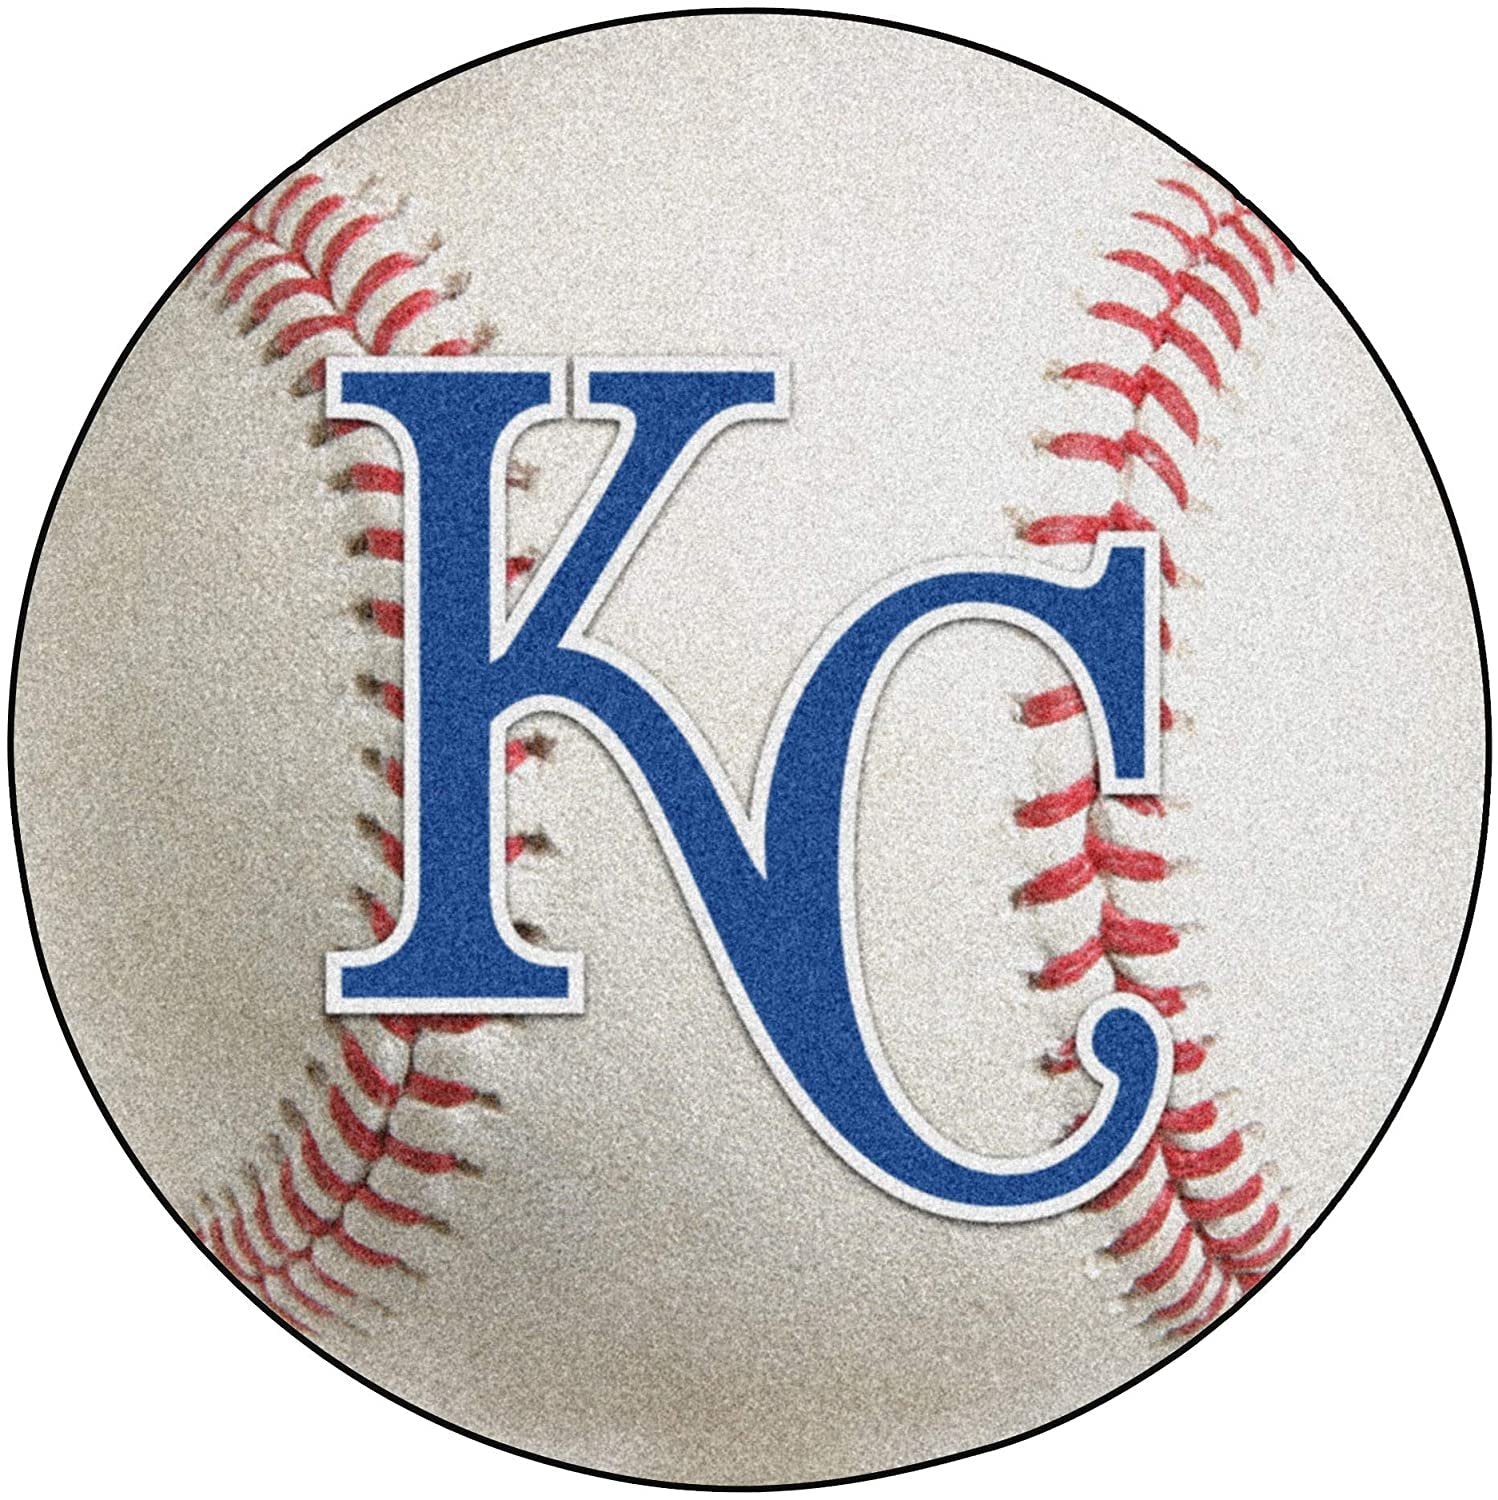 Kansas City Royals 27 Inch Area Rug Floor Mat, Nylon, Anti-Skid Backing, Baseball Shaped